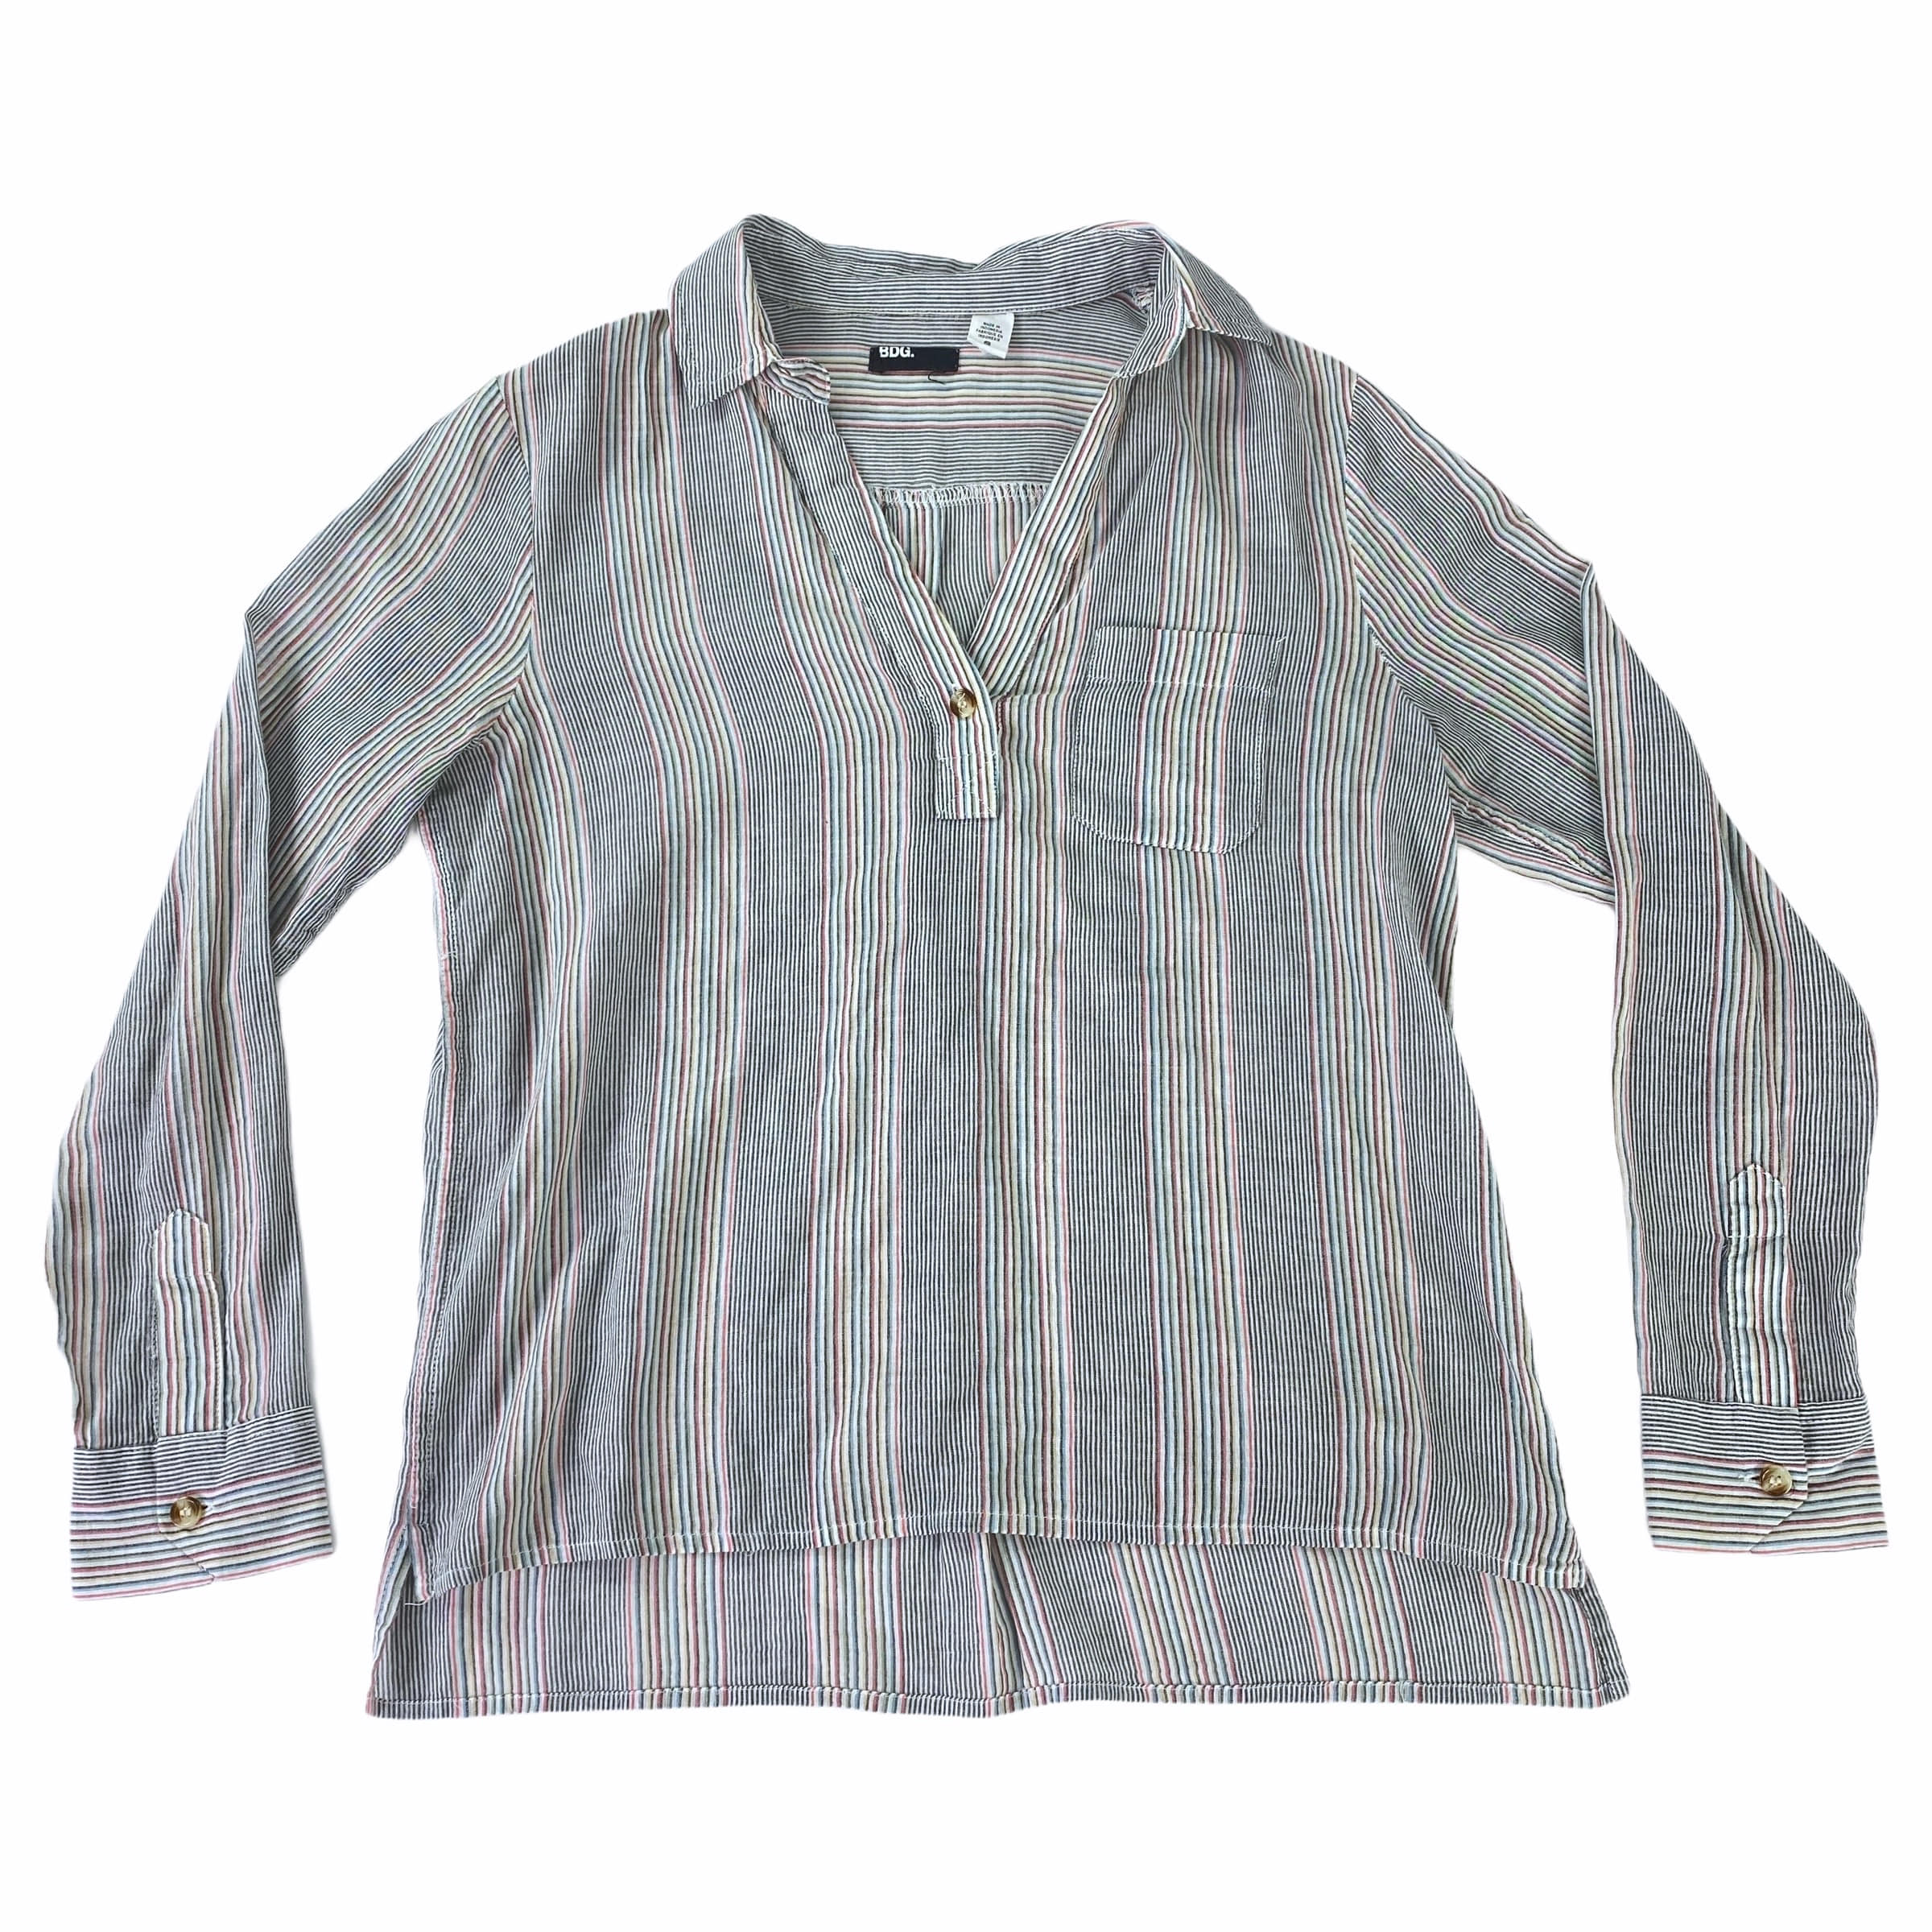 [BDG] Line Stripe Shirt - Size S